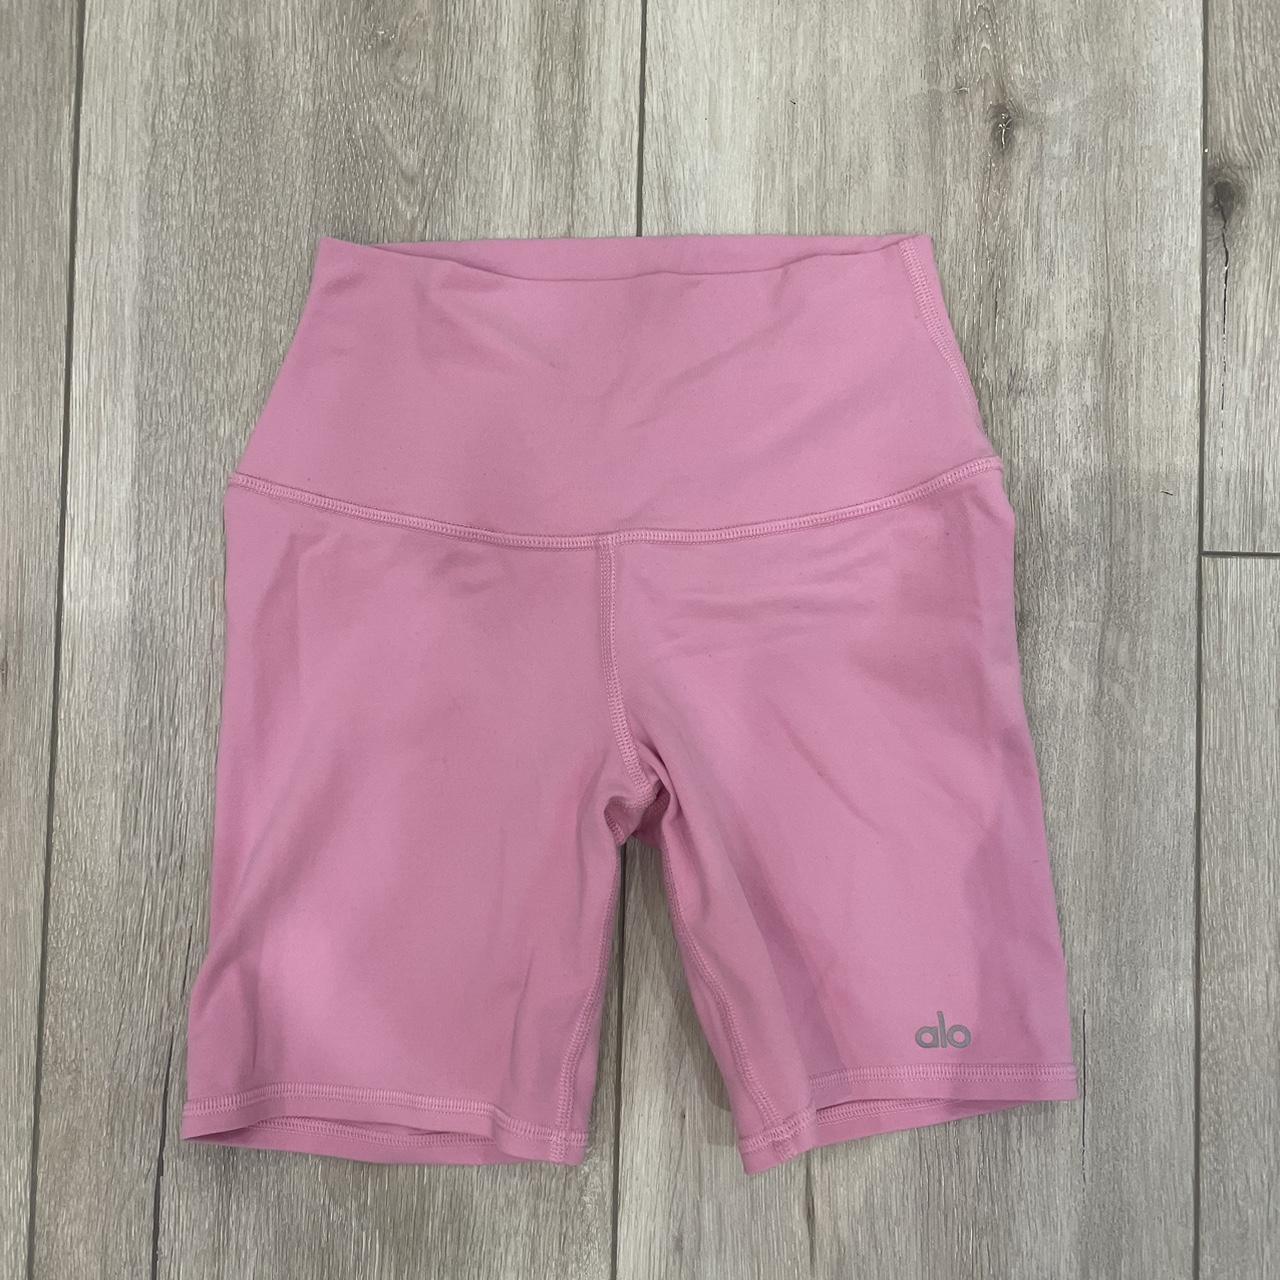 Alo pink biker shorts Original price: $68 - Depop